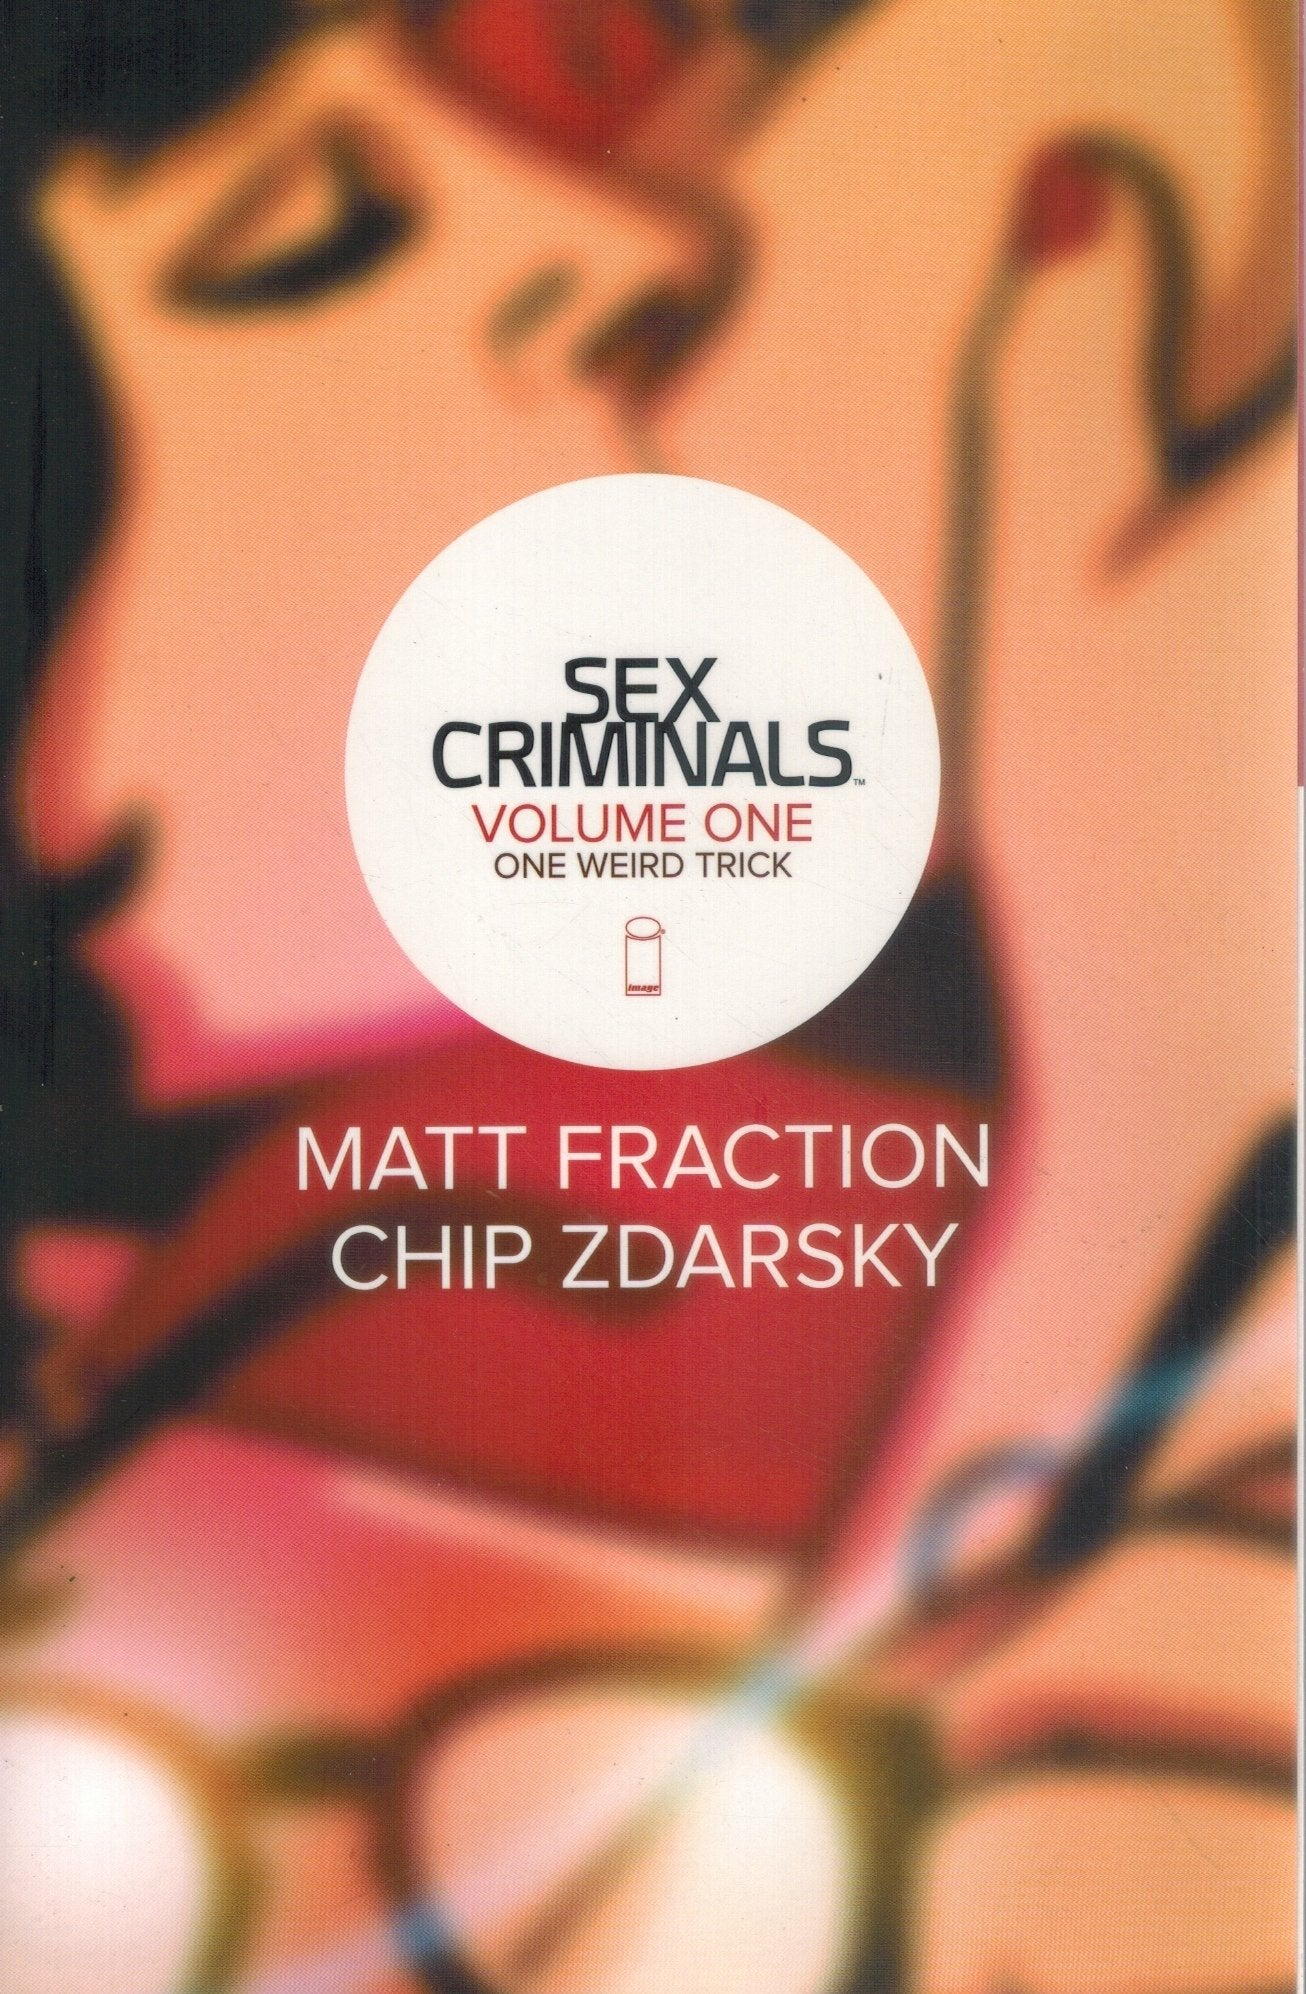 Sex Criminals Volume 1  One Weird Trick  by Fraction, Matt & Chip Zdarsky